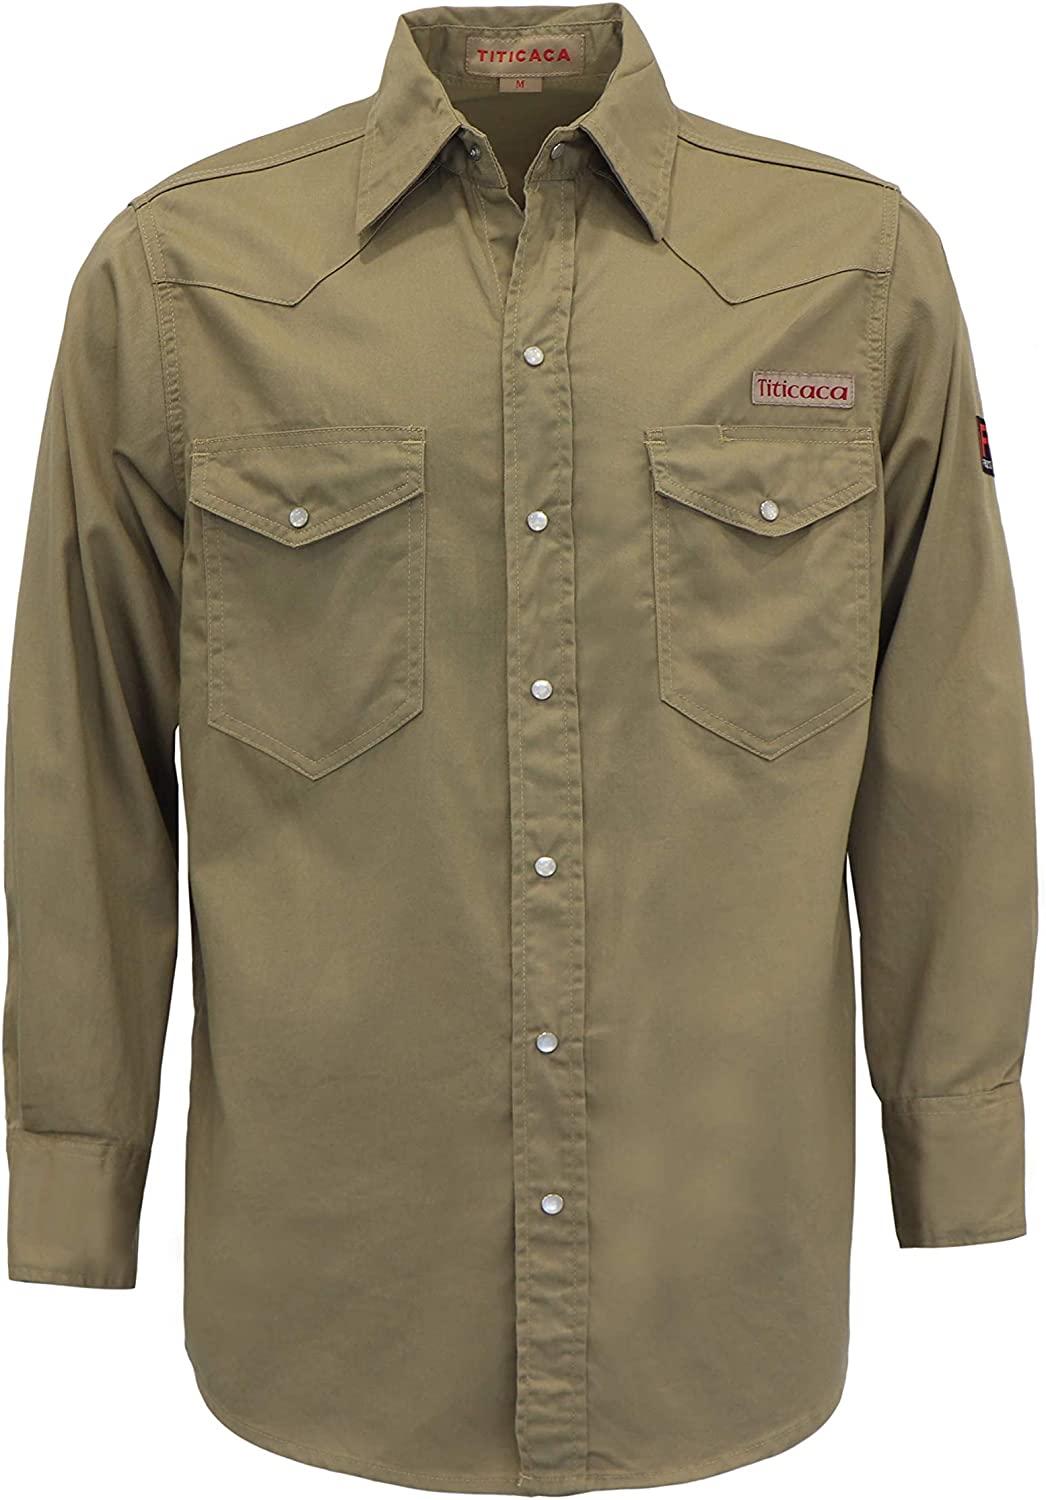 Titicaca FR Shirt Flame Resistant Men's Cotton 6.5oz Lightweight Uniform Shirt 